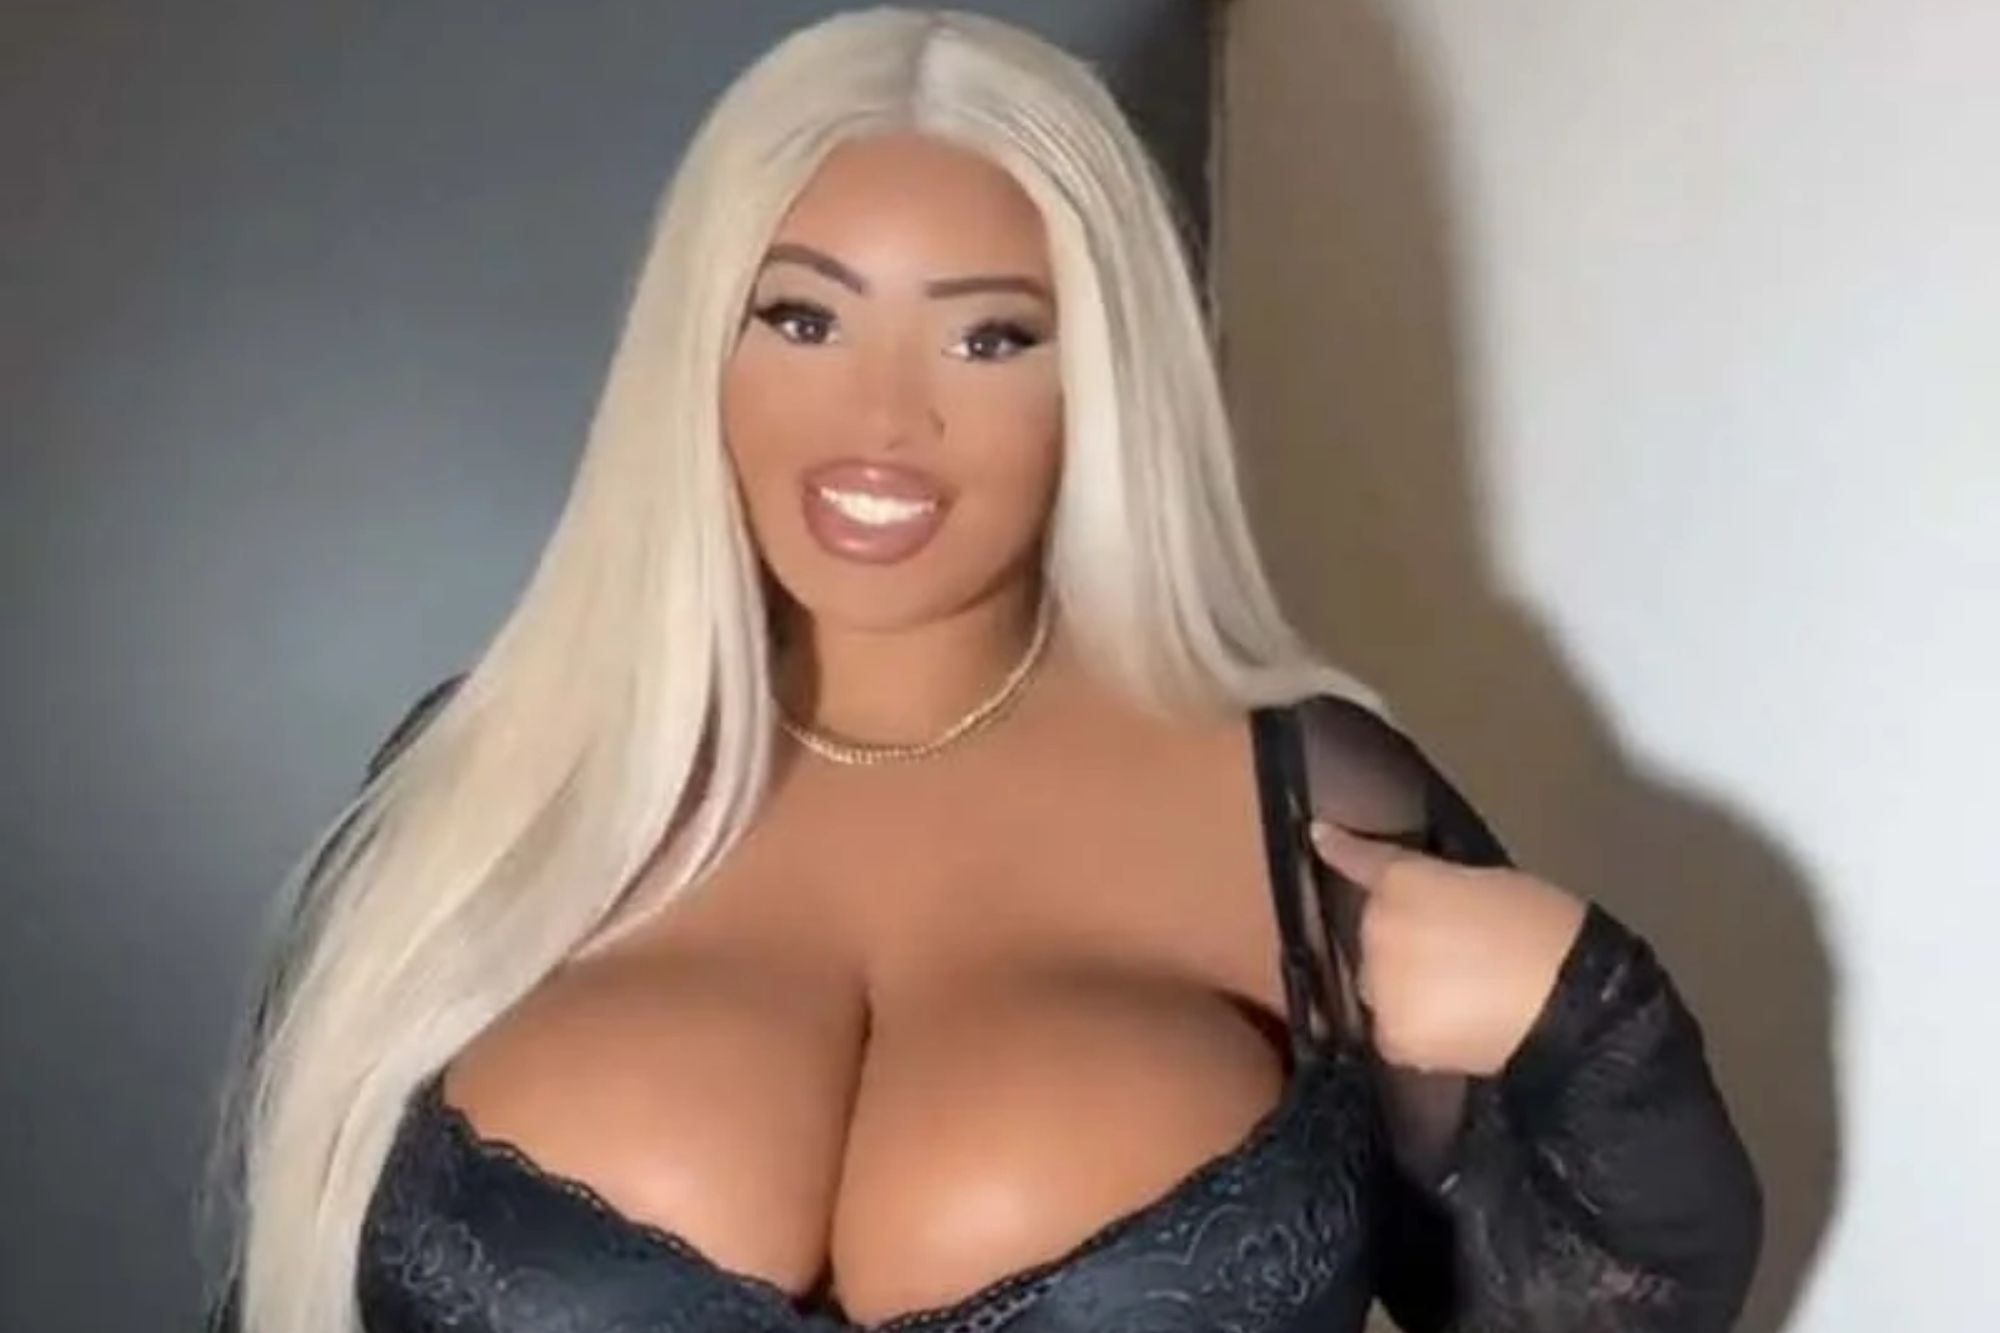 anyie jok share huge fat black tits photos